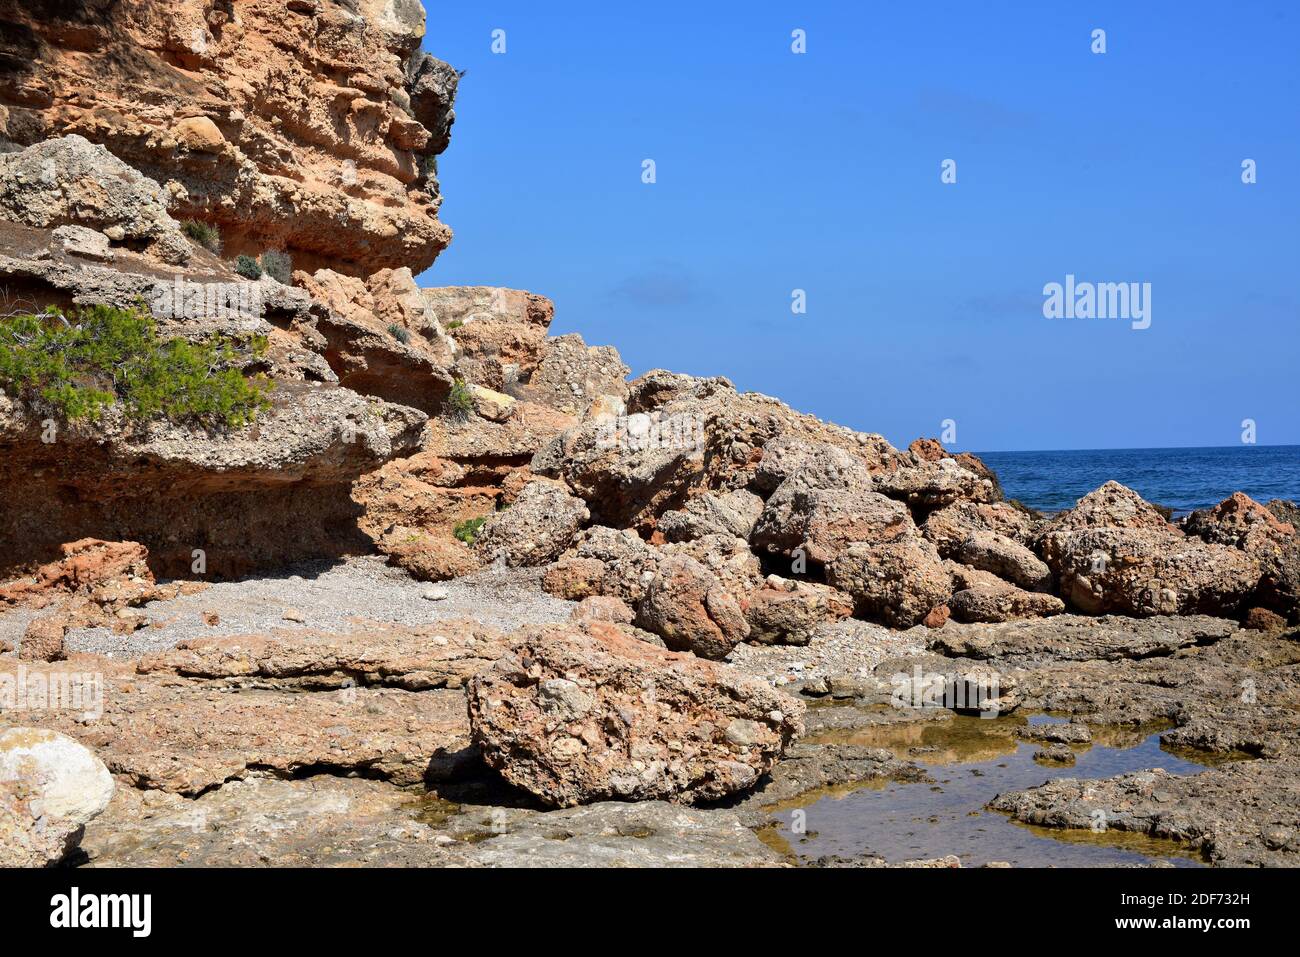 Conglomerate coast. L'Ametlla de Mar, Tarragona province, Catalonia, Spain. Stock Photo